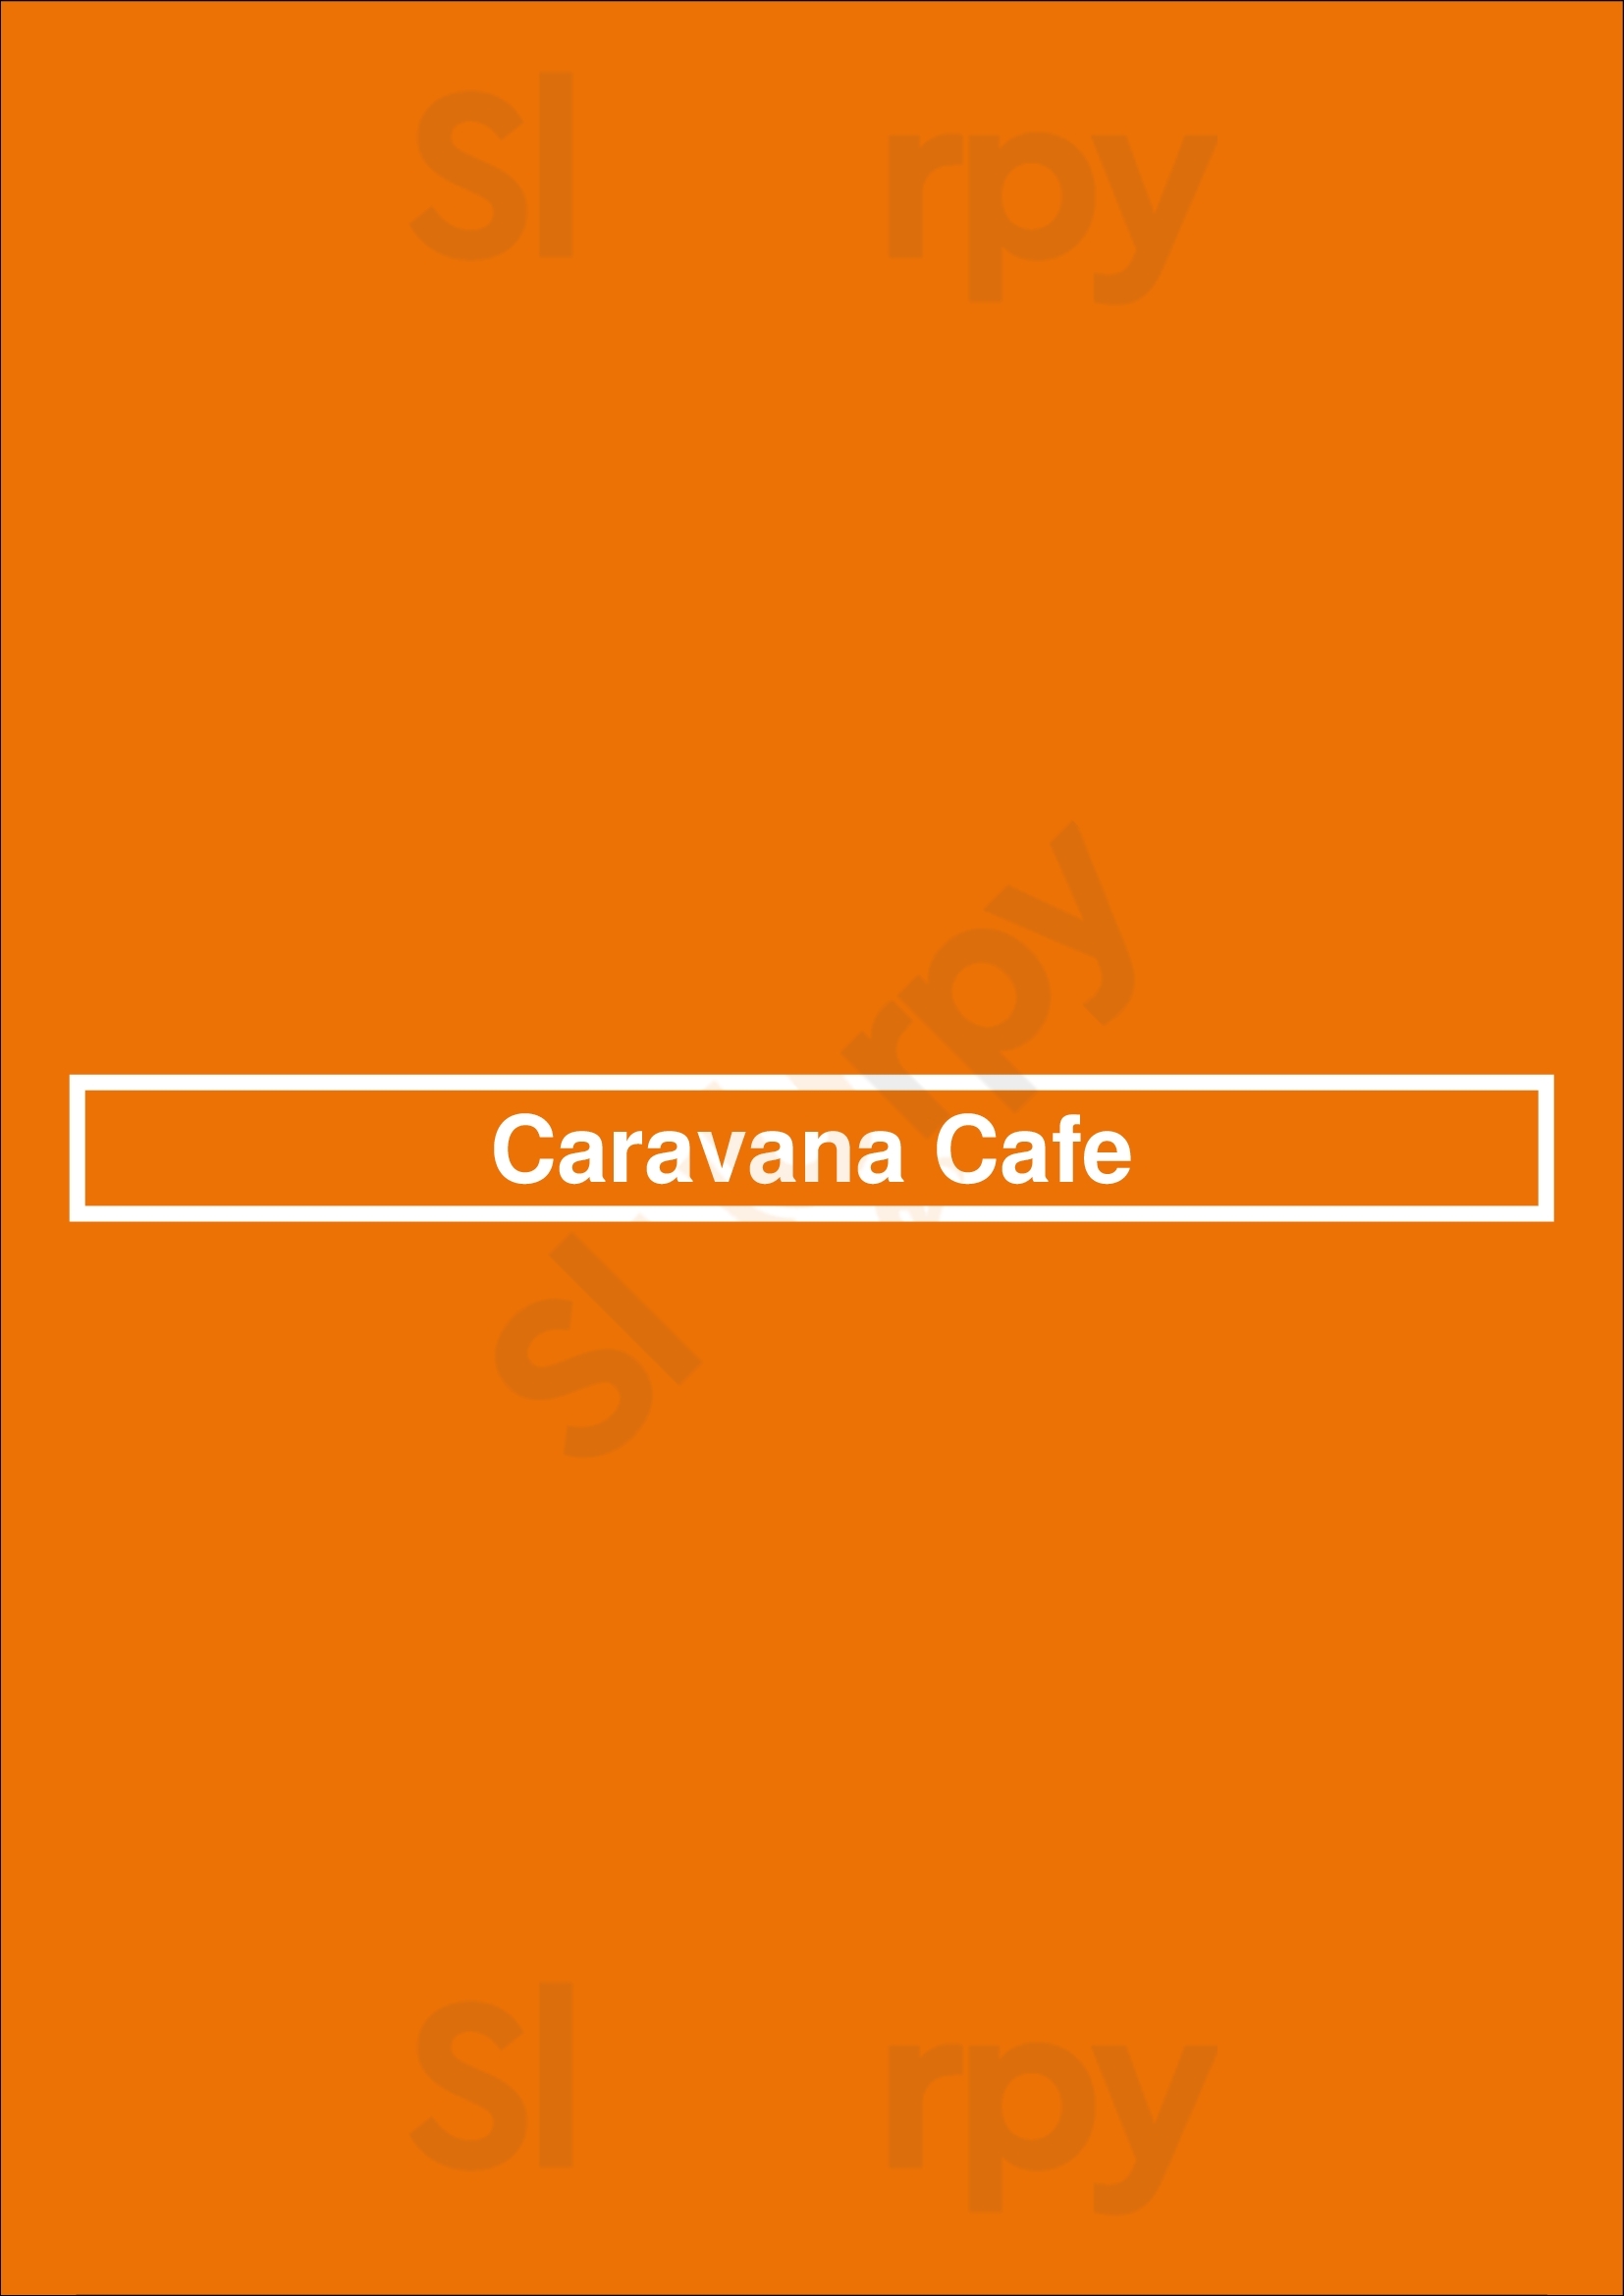 Caravana Cafe Victoria Menu - 1